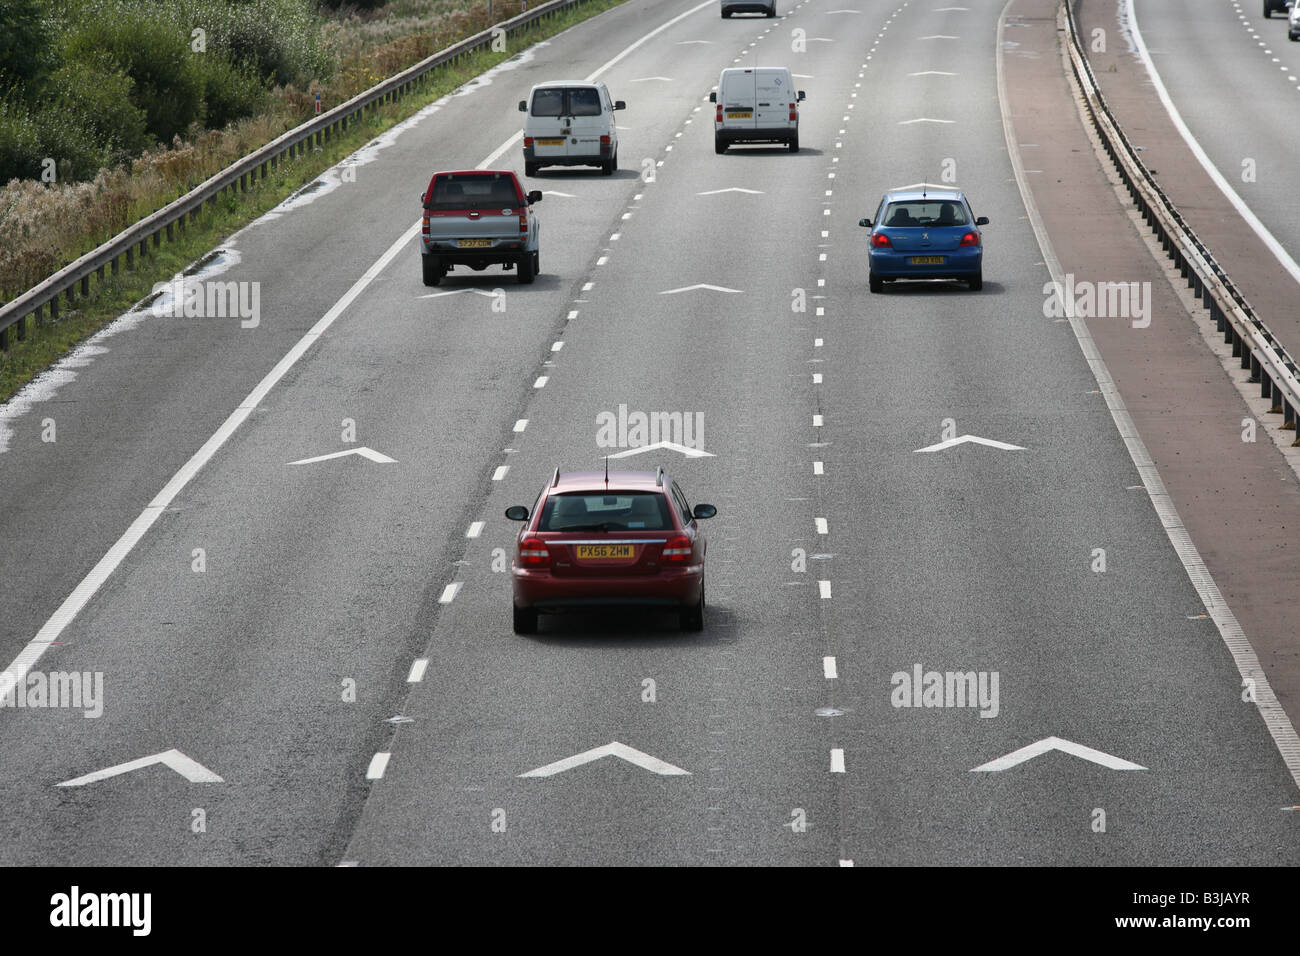 Keep apart 2 chevrons motorway road markings and traffic on M56, Cheshire,UK Stock Photo